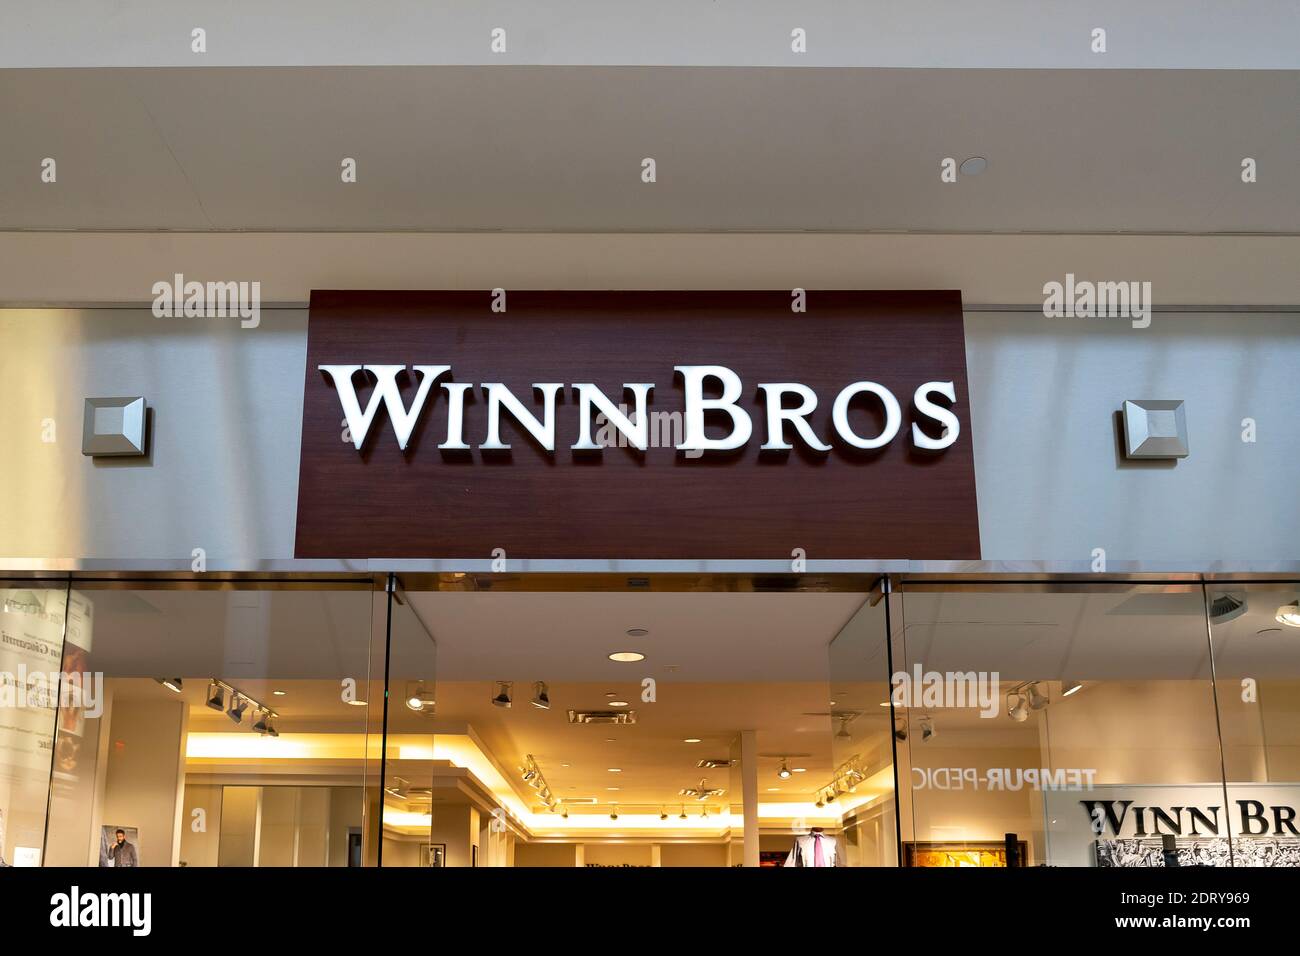 Winn Bros store sign Stock Photo